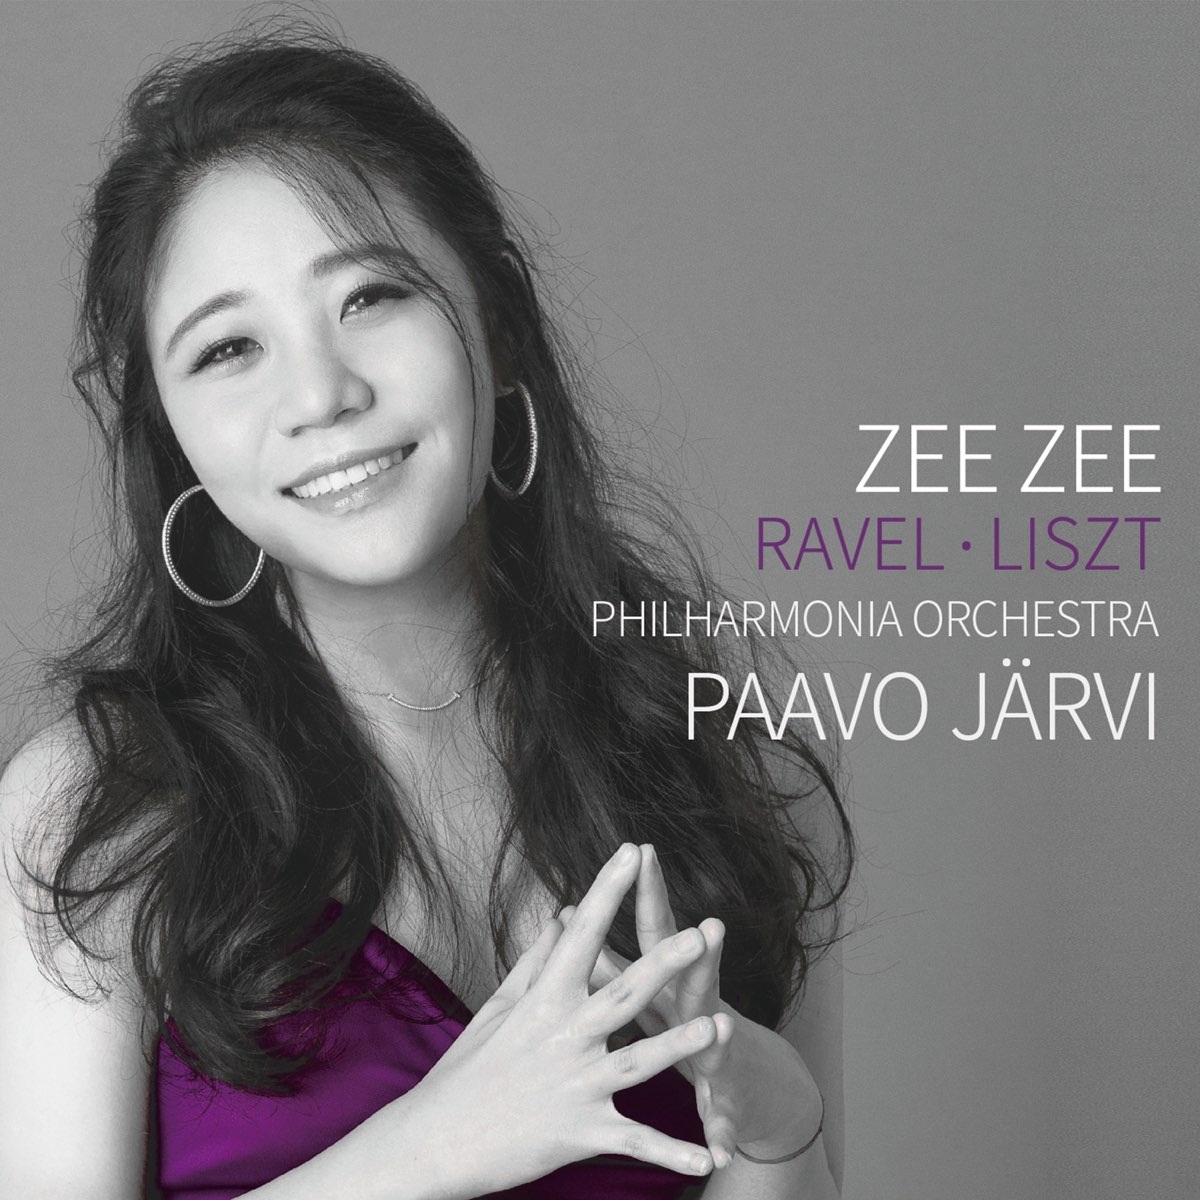 Ravel & Liszt Piano Concertos - Zee Zee